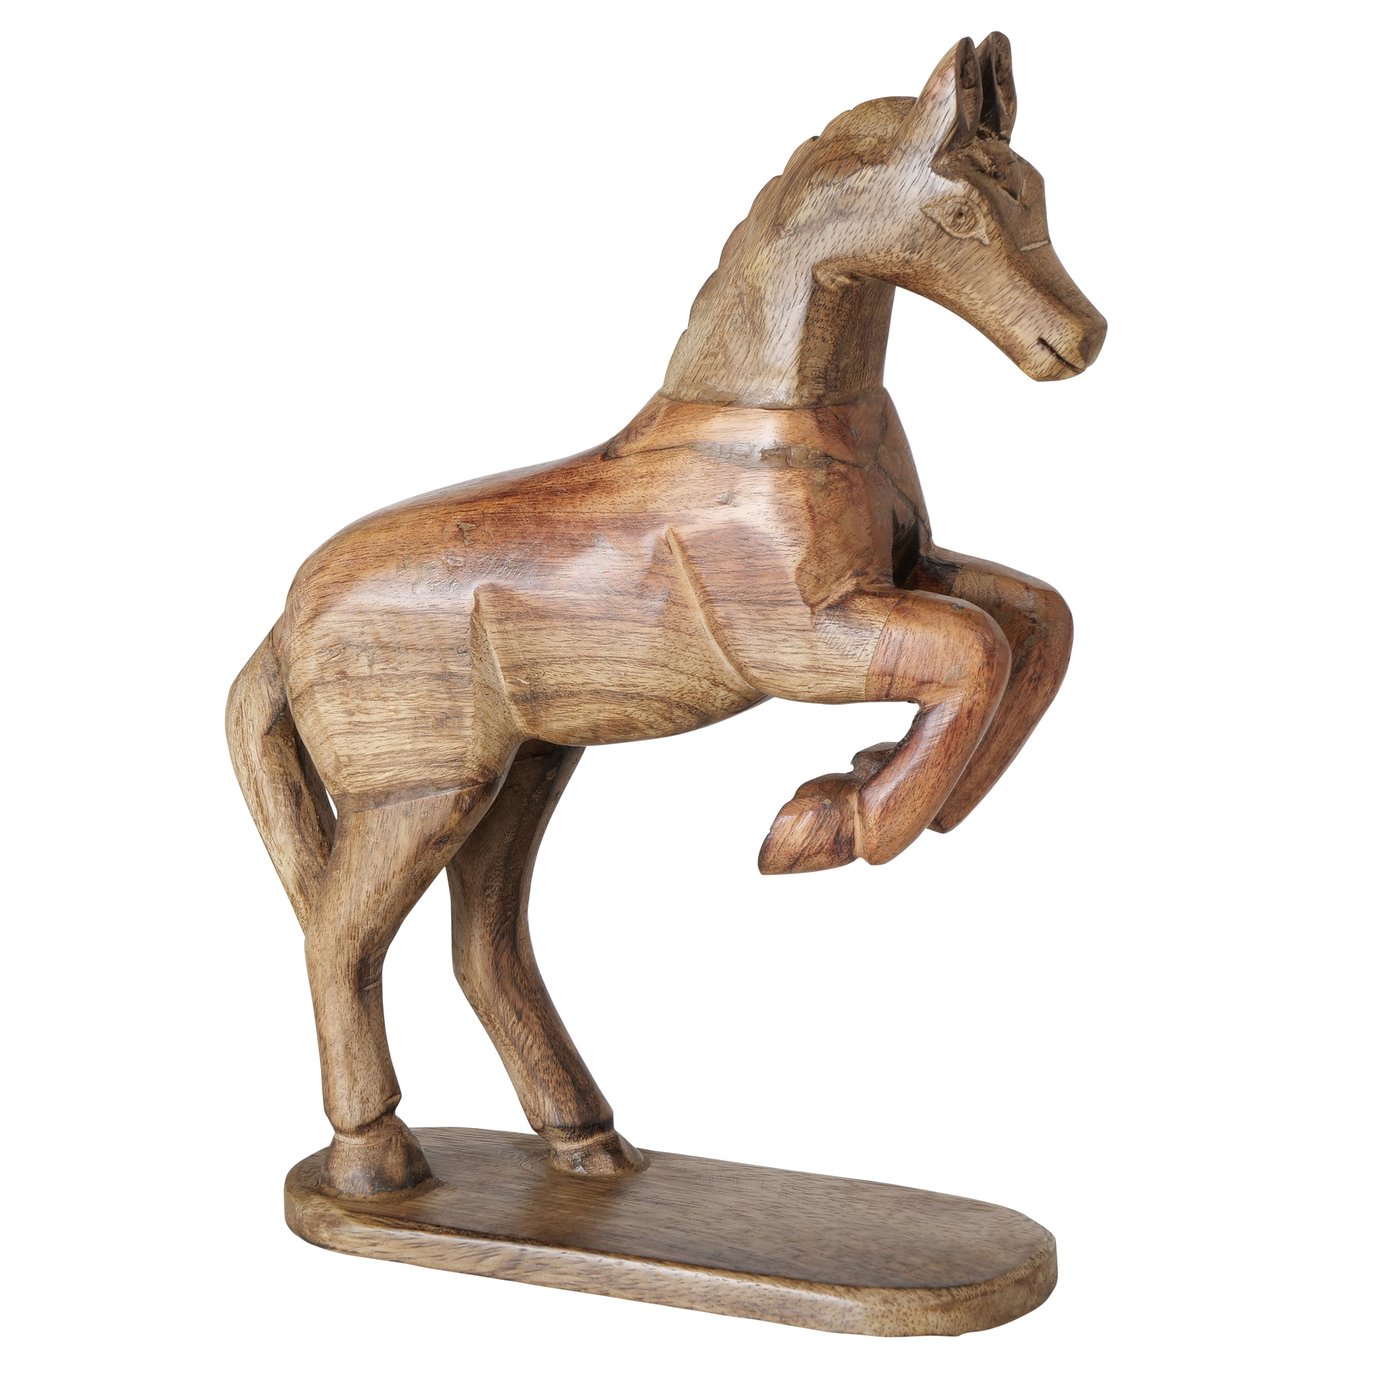 Deko Figur Pferd "Tiziano" aus Mangoholz, Pferdefigur, H30cm, 2015965, 4020607947733, Boltze, steigendes Pferd